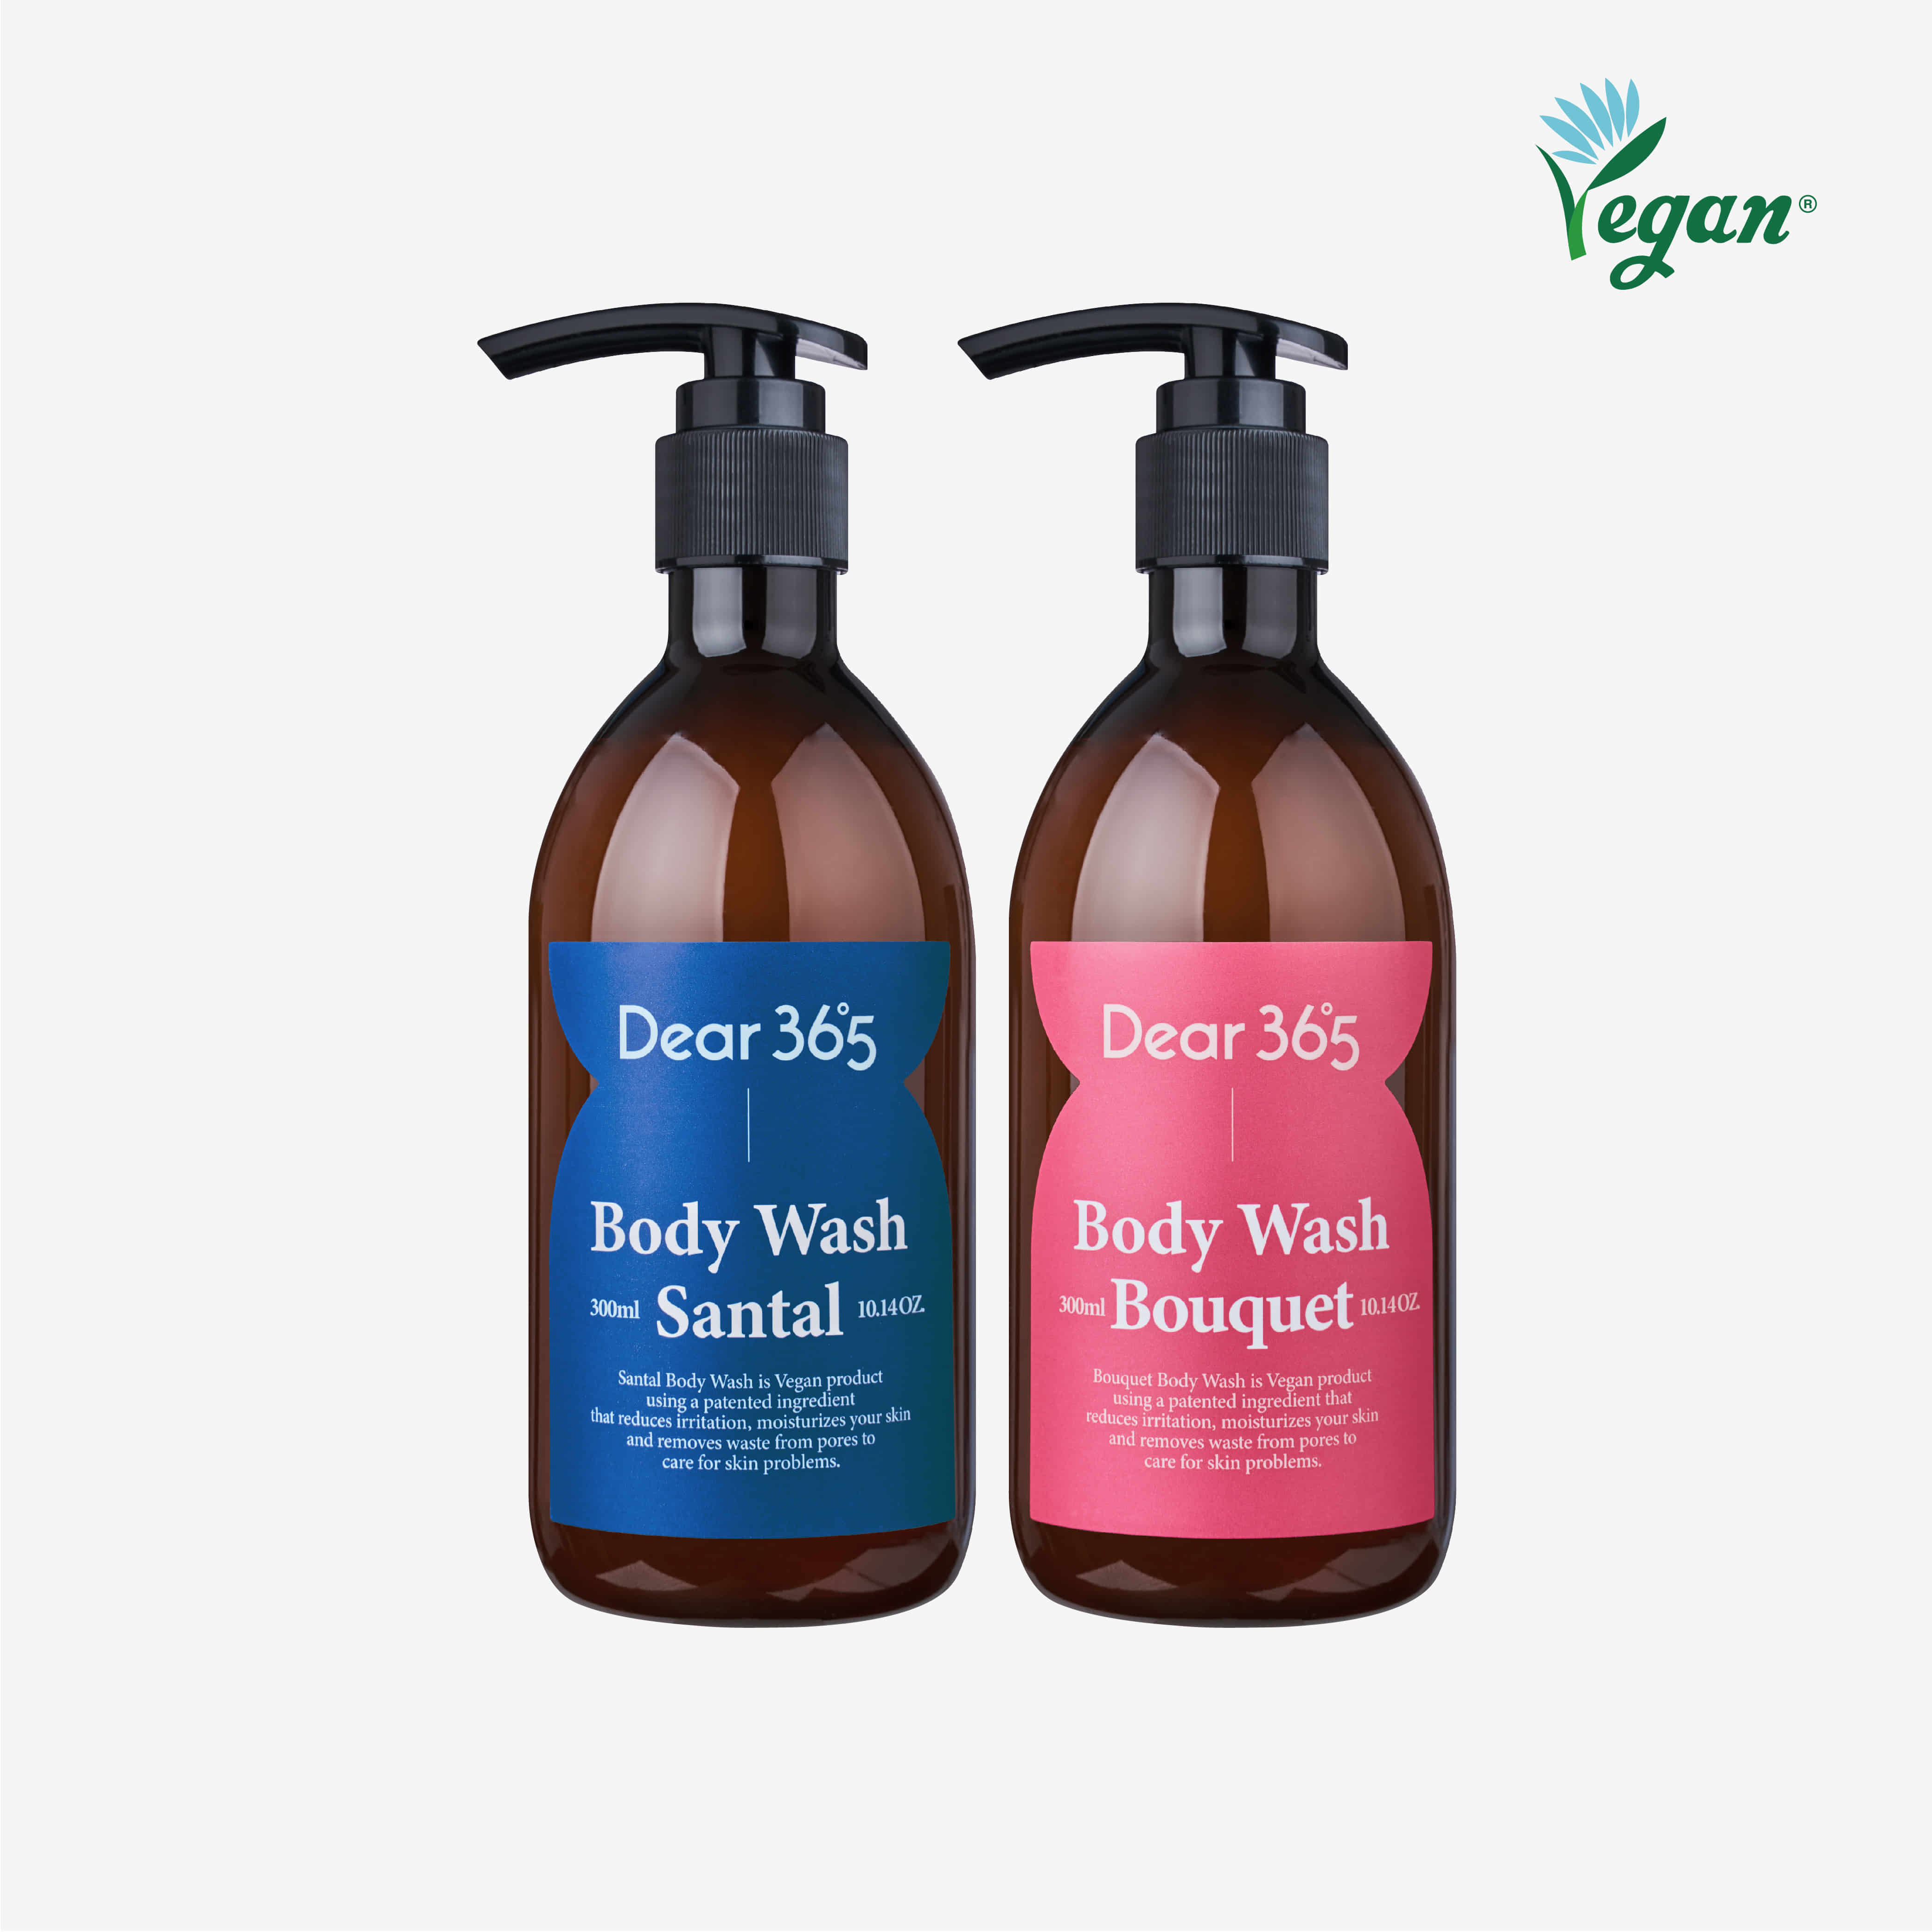 [EVENT] Vegan body wash dual functionality